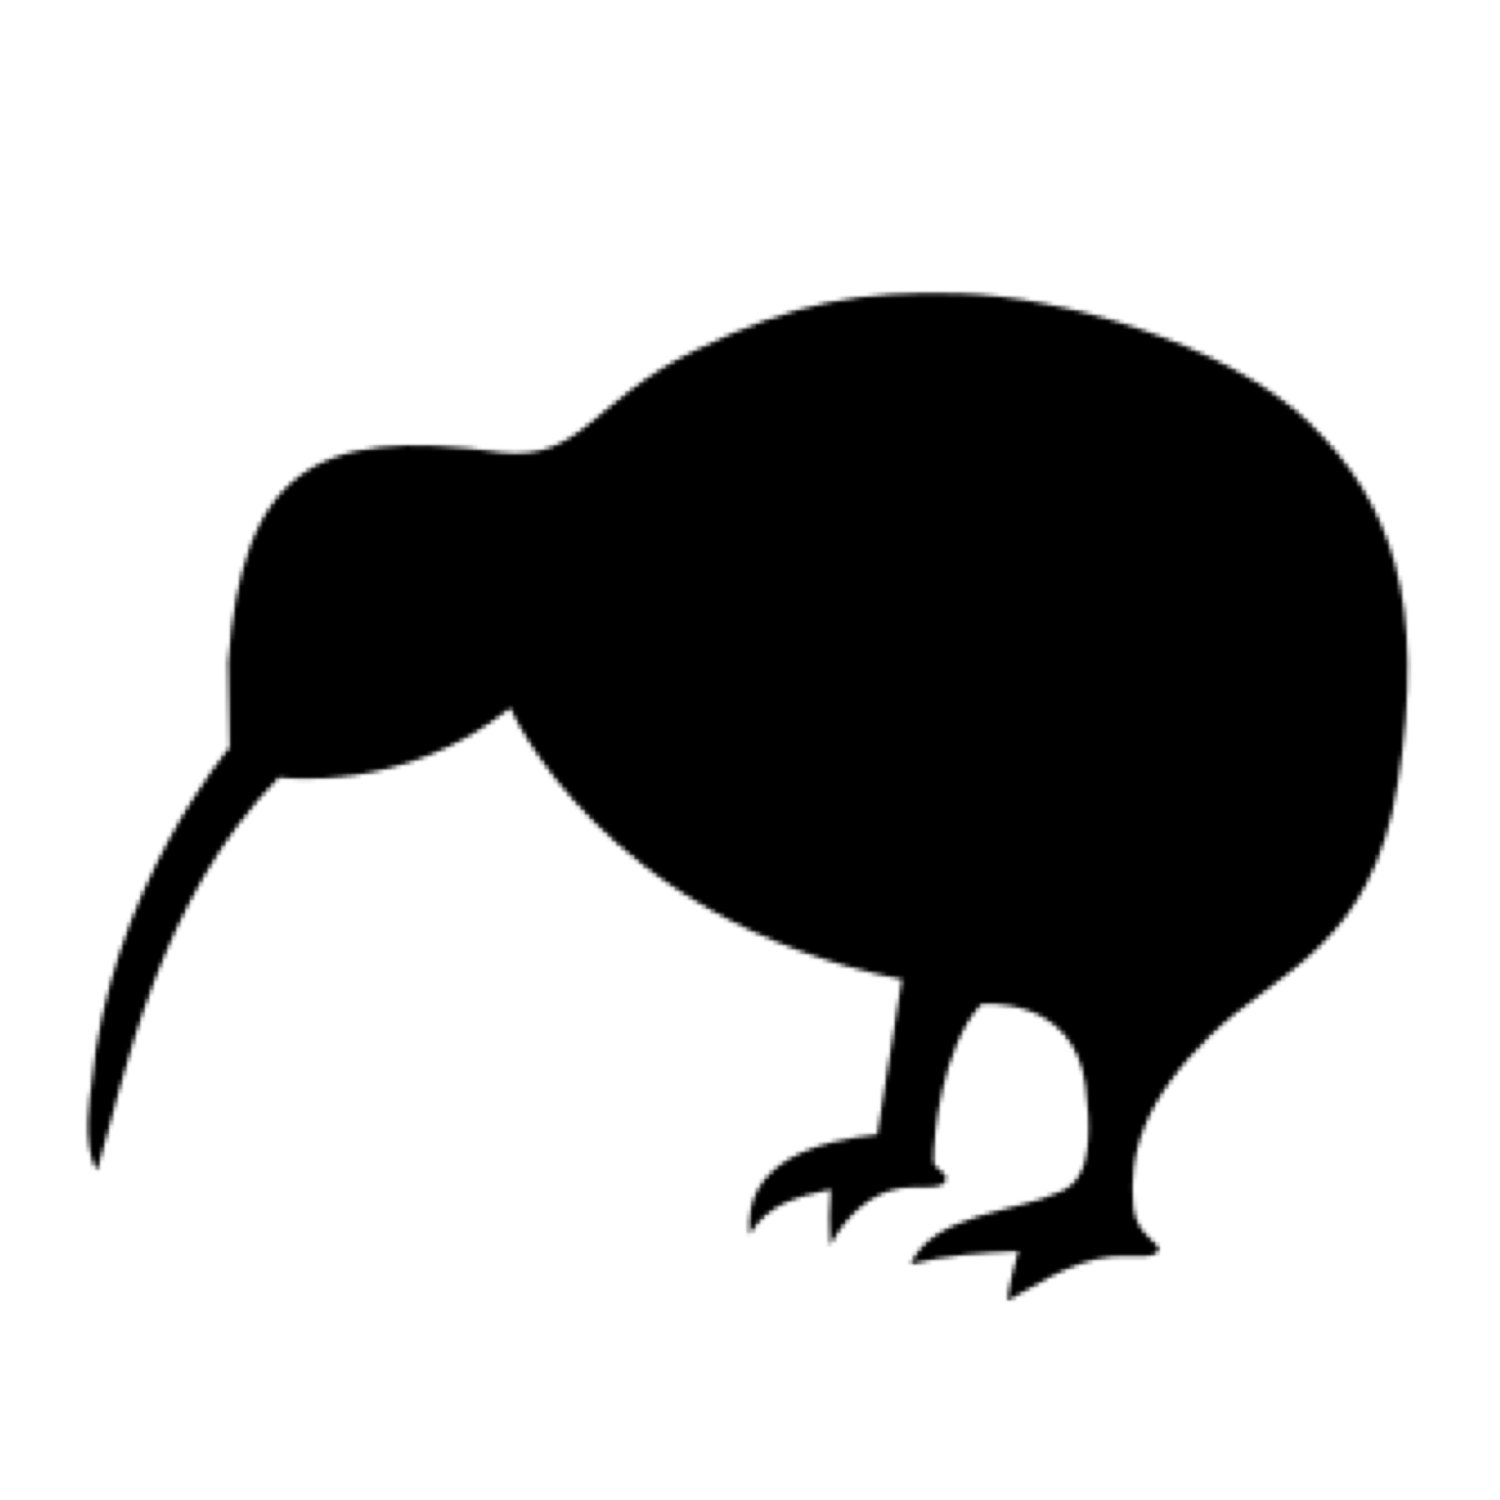 Tiles Kiwi Bird Animal Reusable Stencil for Floors Walls Decorations